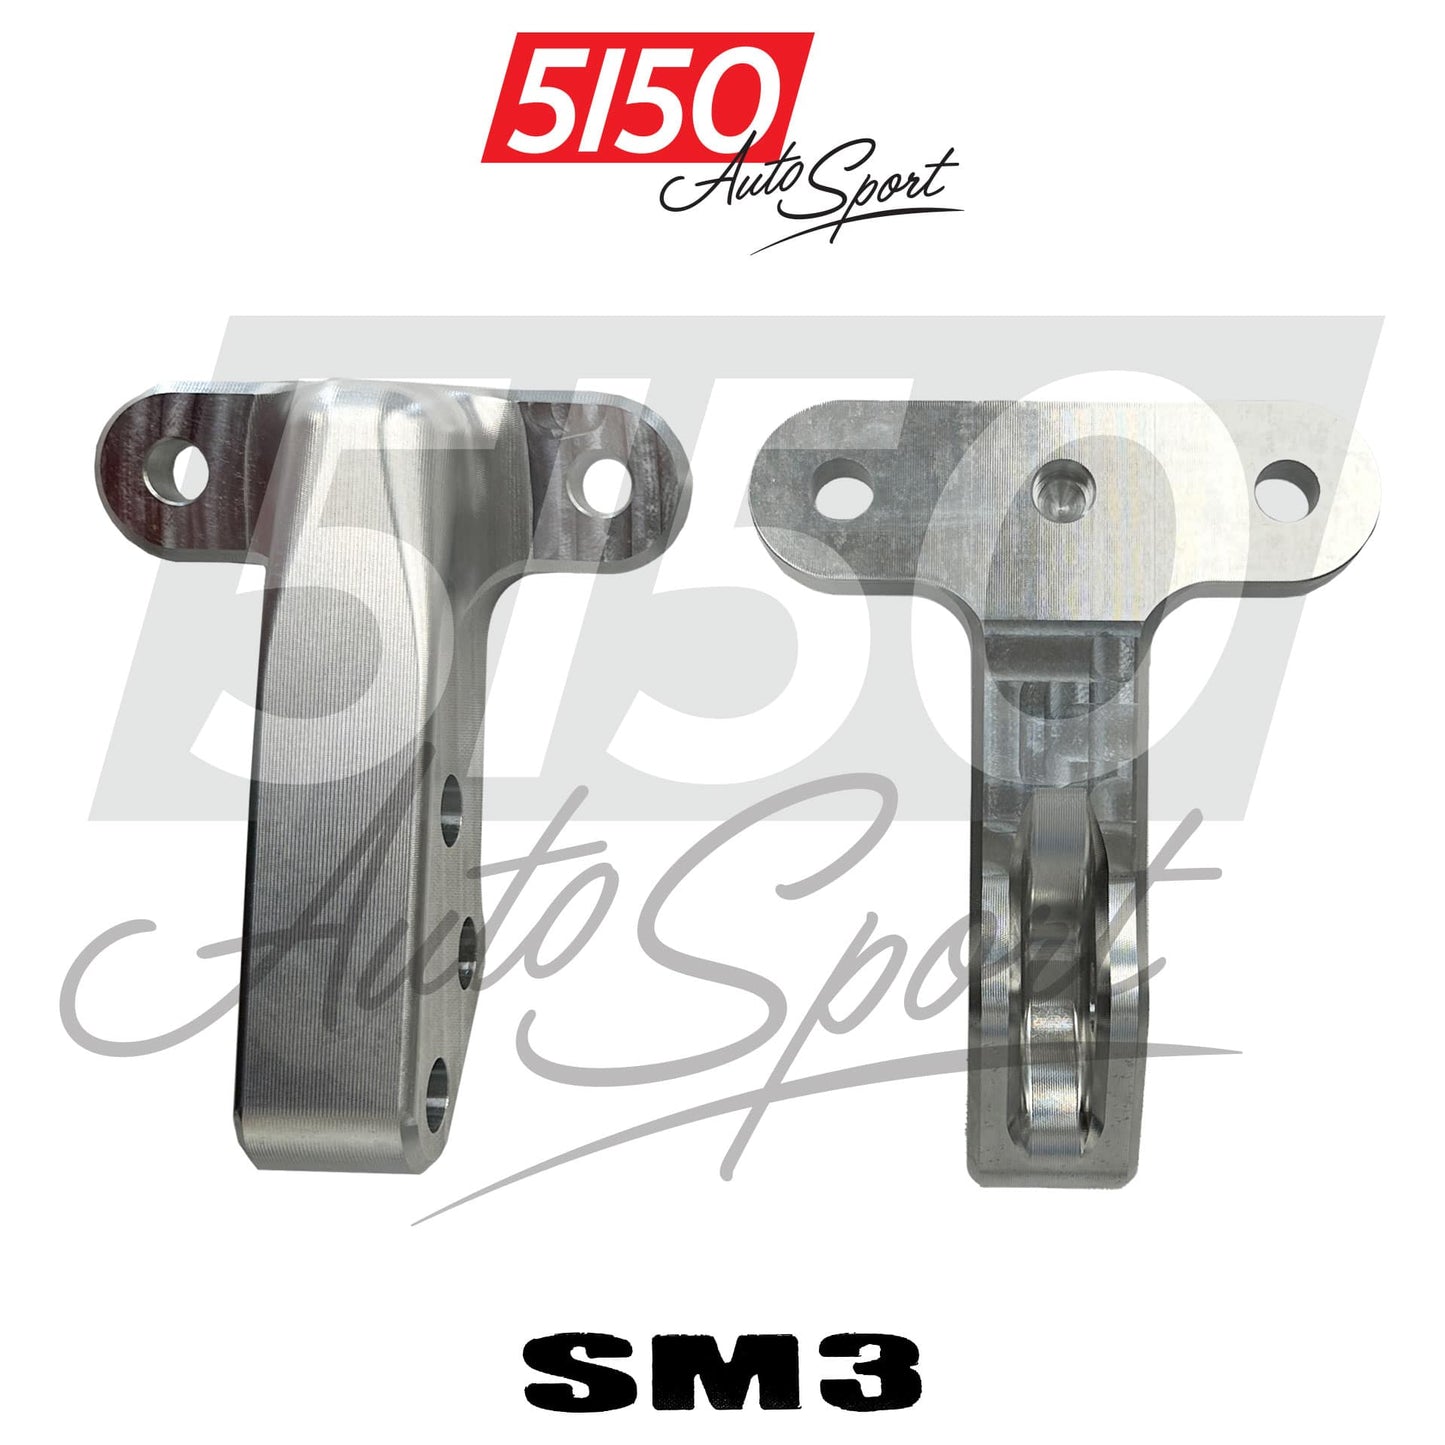 SM3 IDS Drag Suspension Adapter Brackets, BMW E36